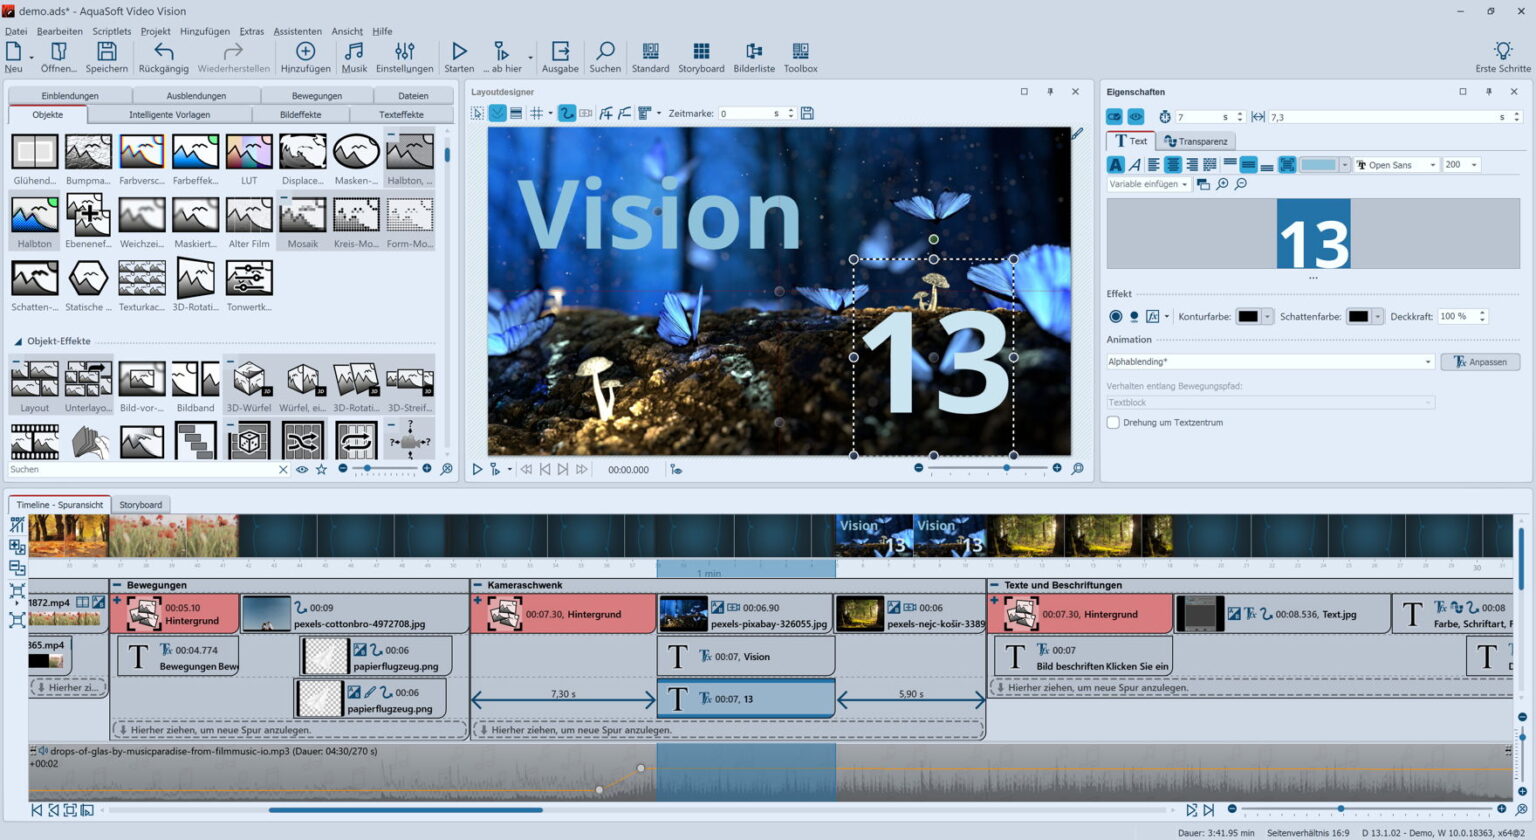 instal the new for windows AquaSoft Photo Vision 14.2.13